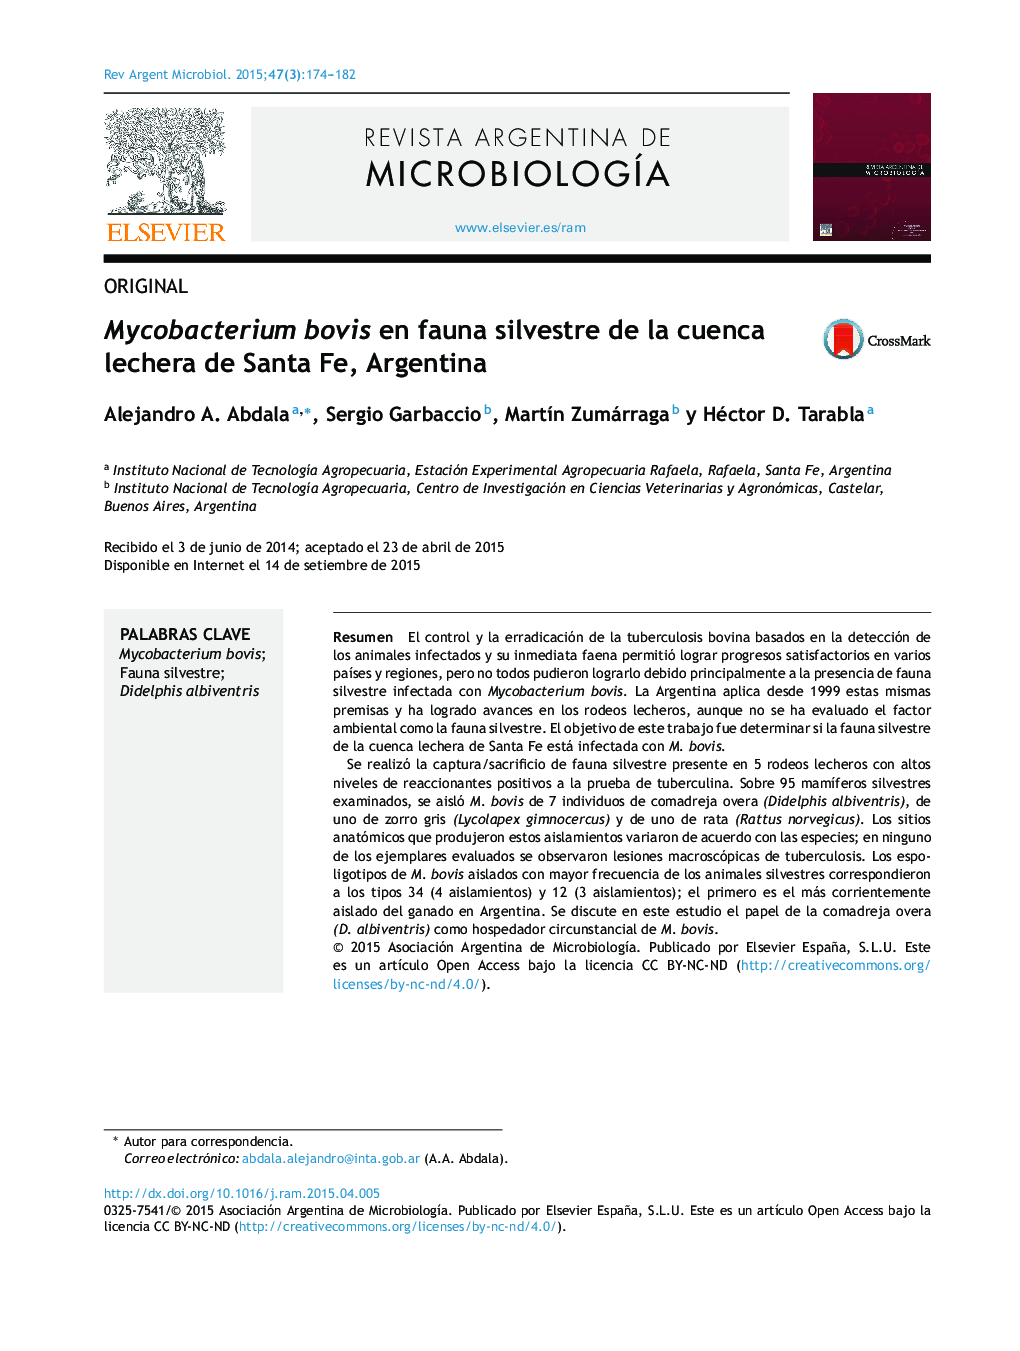 Mycobacterium bovis en fauna silvestre de la cuenca lechera de Santa Fe, Argentina